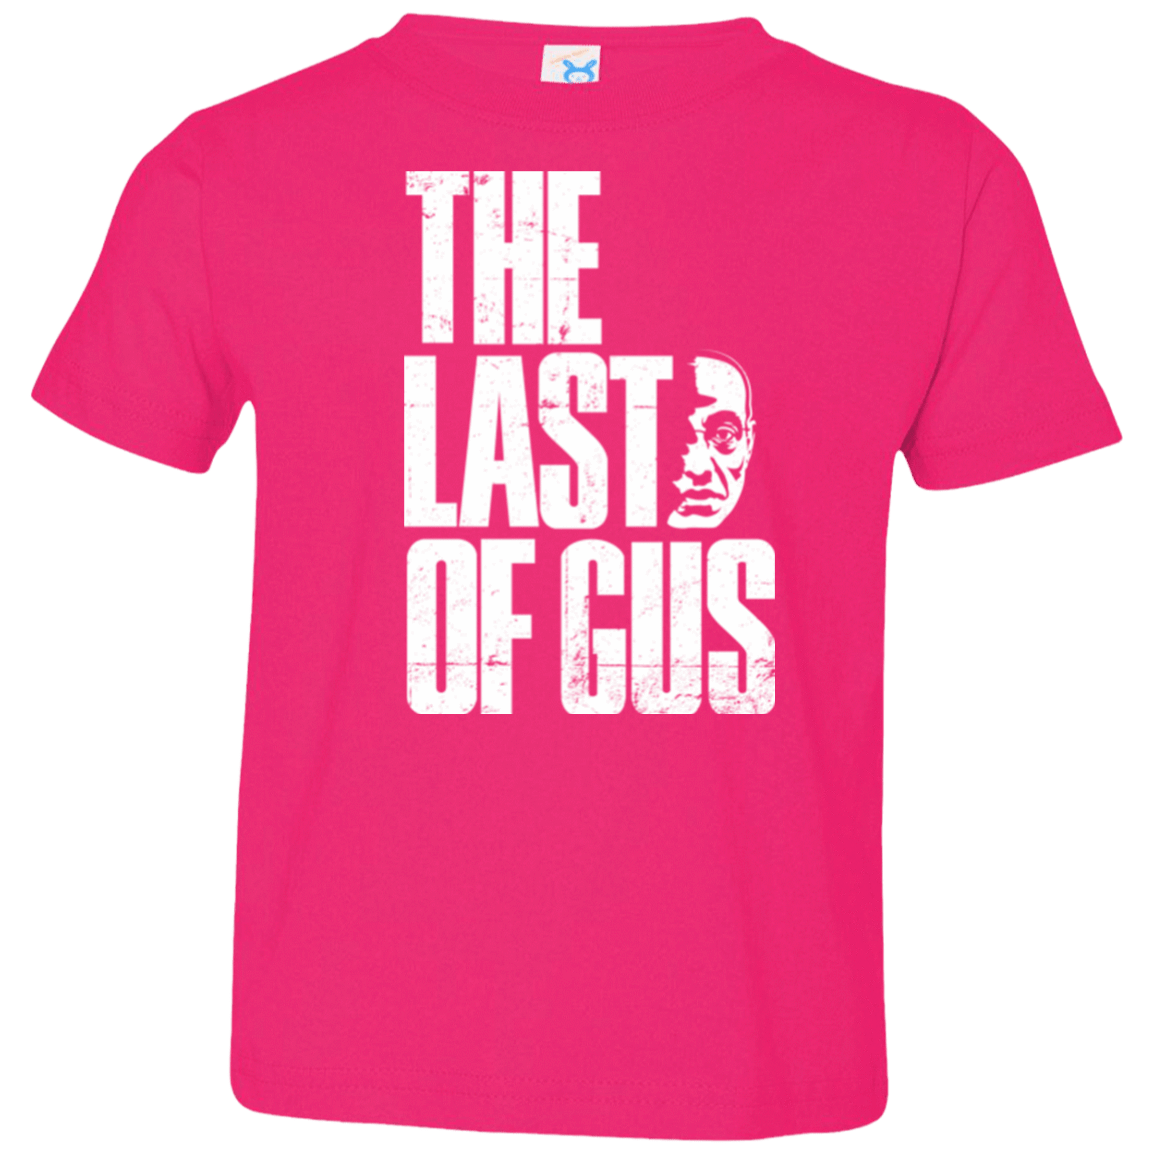 T-Shirts Hot Pink / 2T Last of Gus Toddler Premium T-Shirt